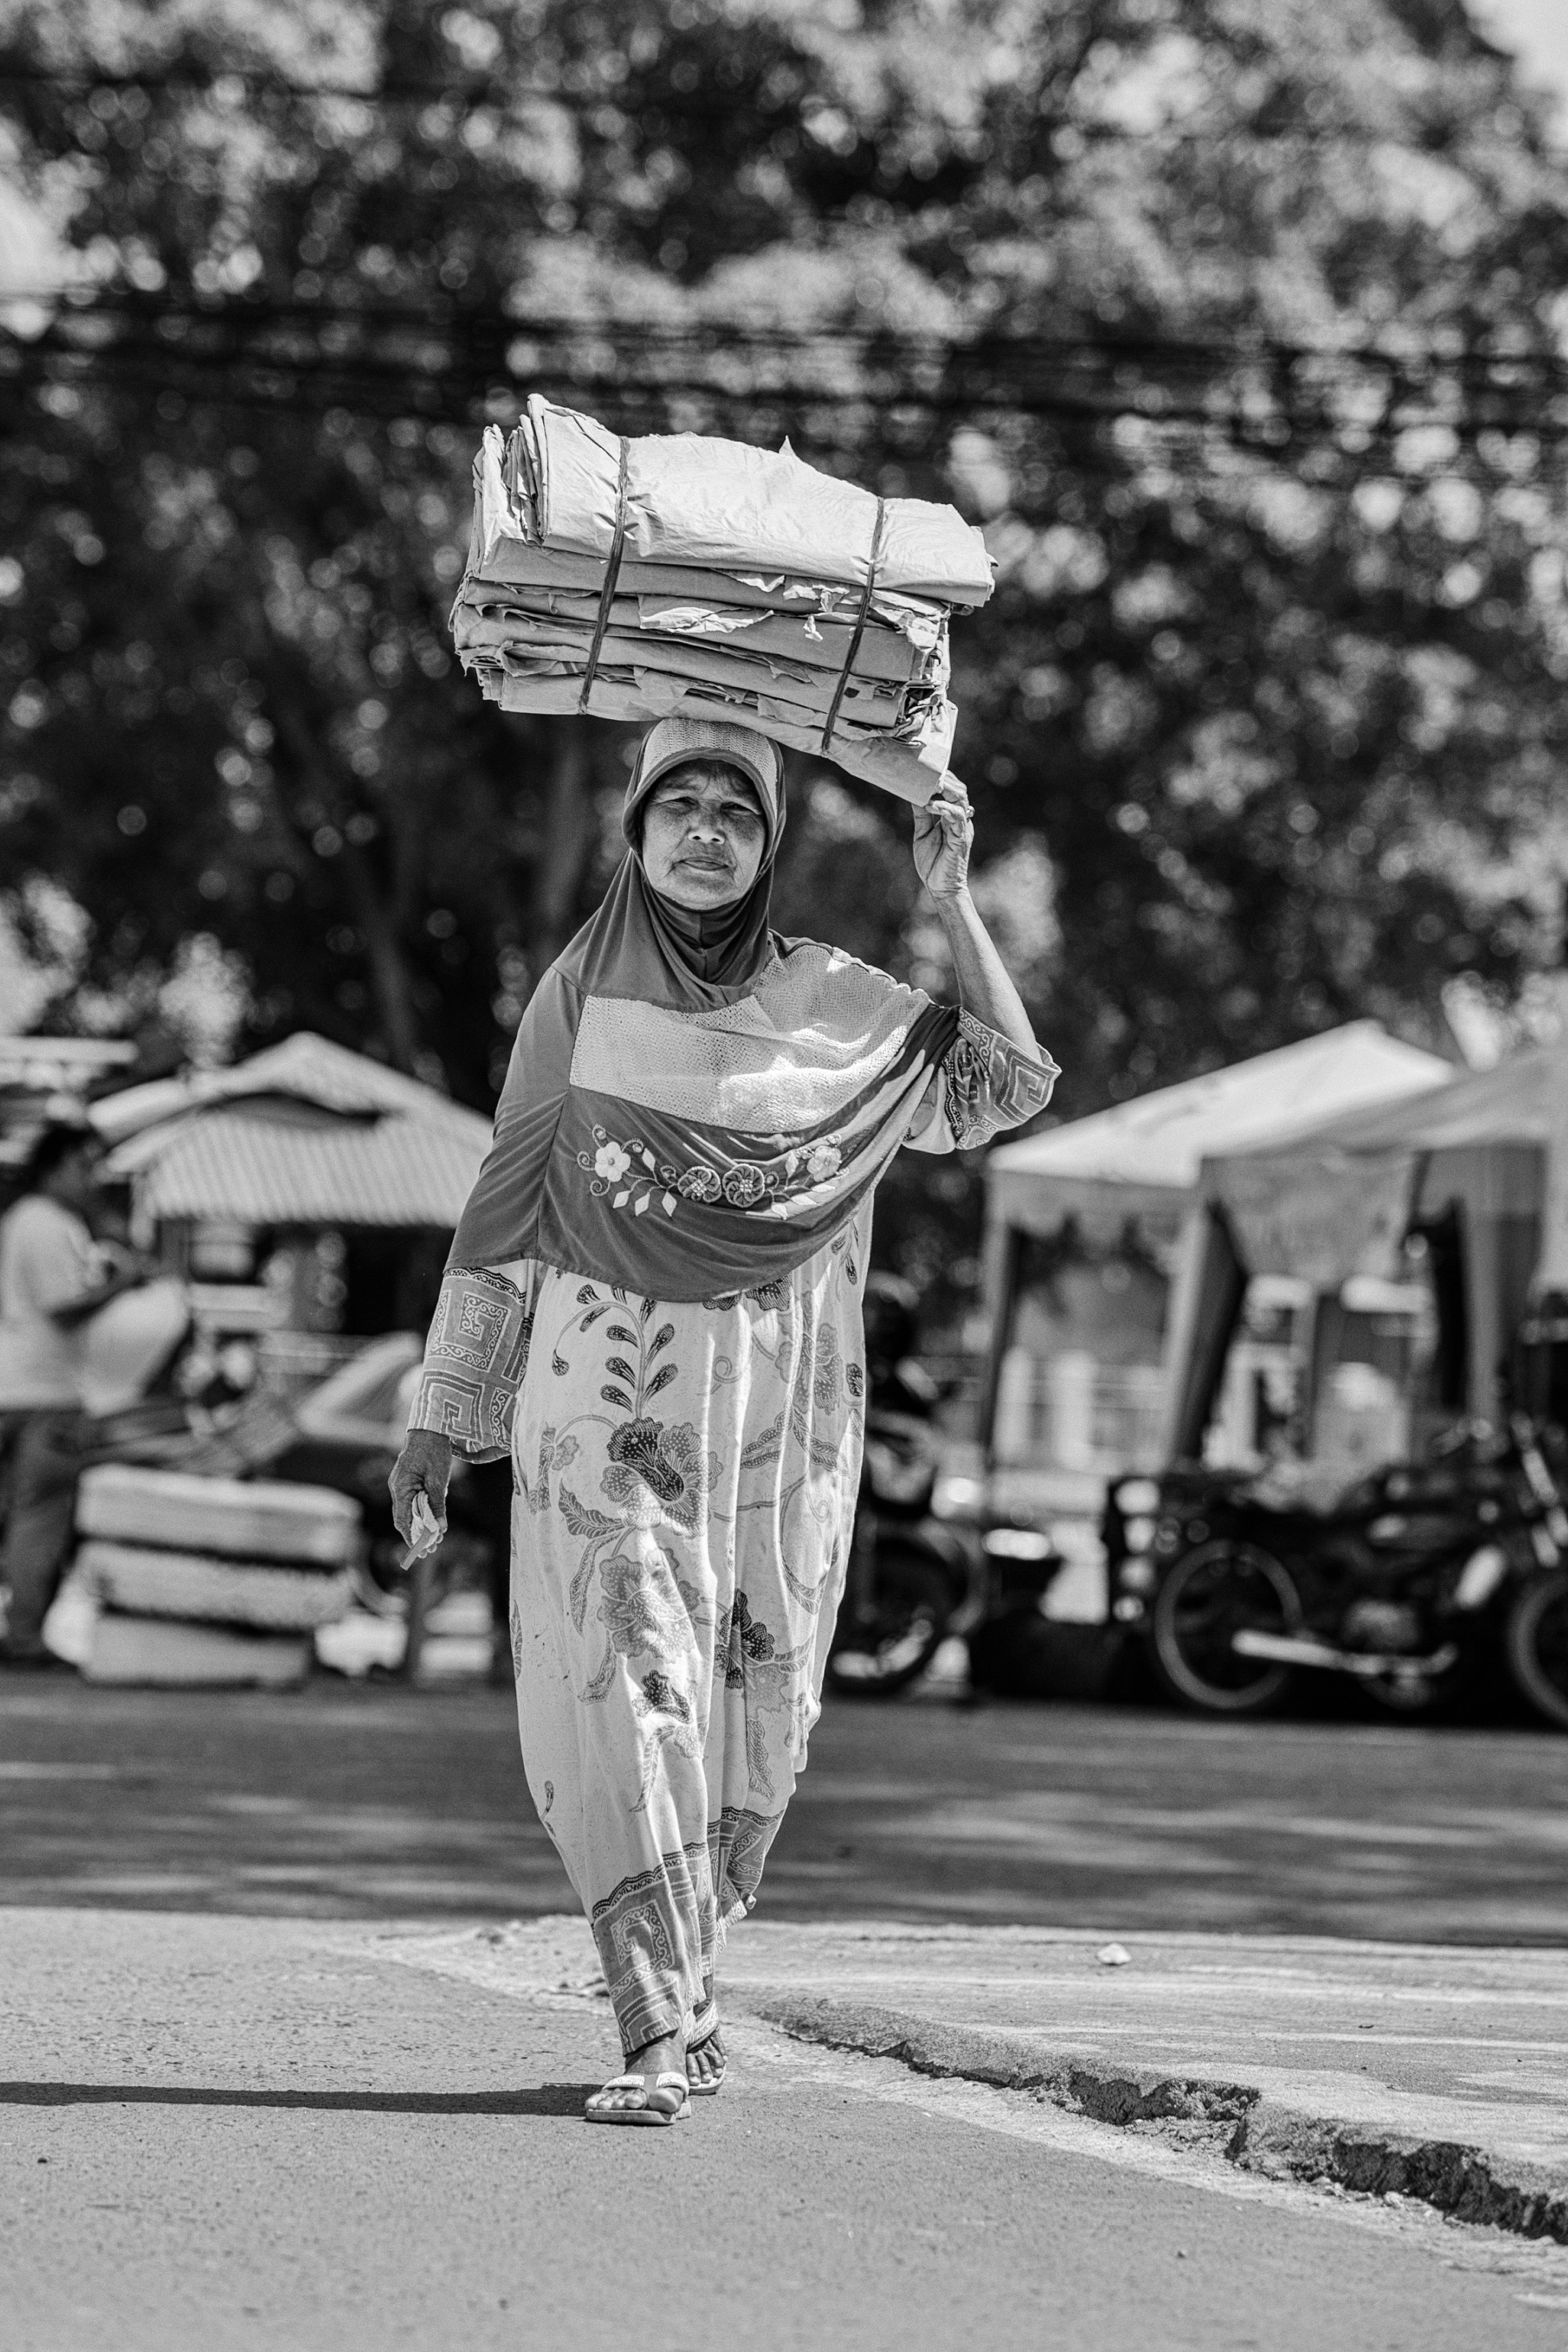 MUD_0562-1 Wanita pembawa karton.jpg